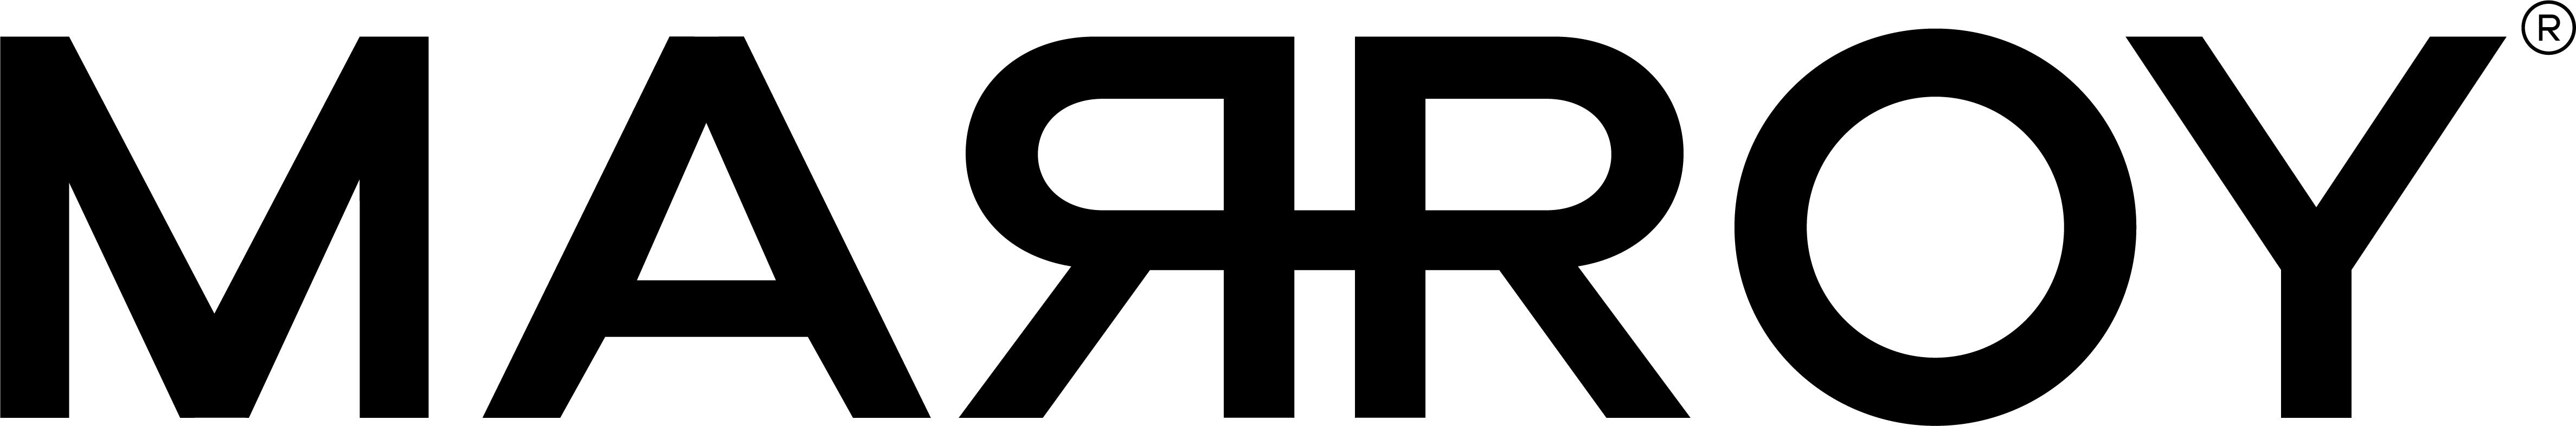 MARROY, logo